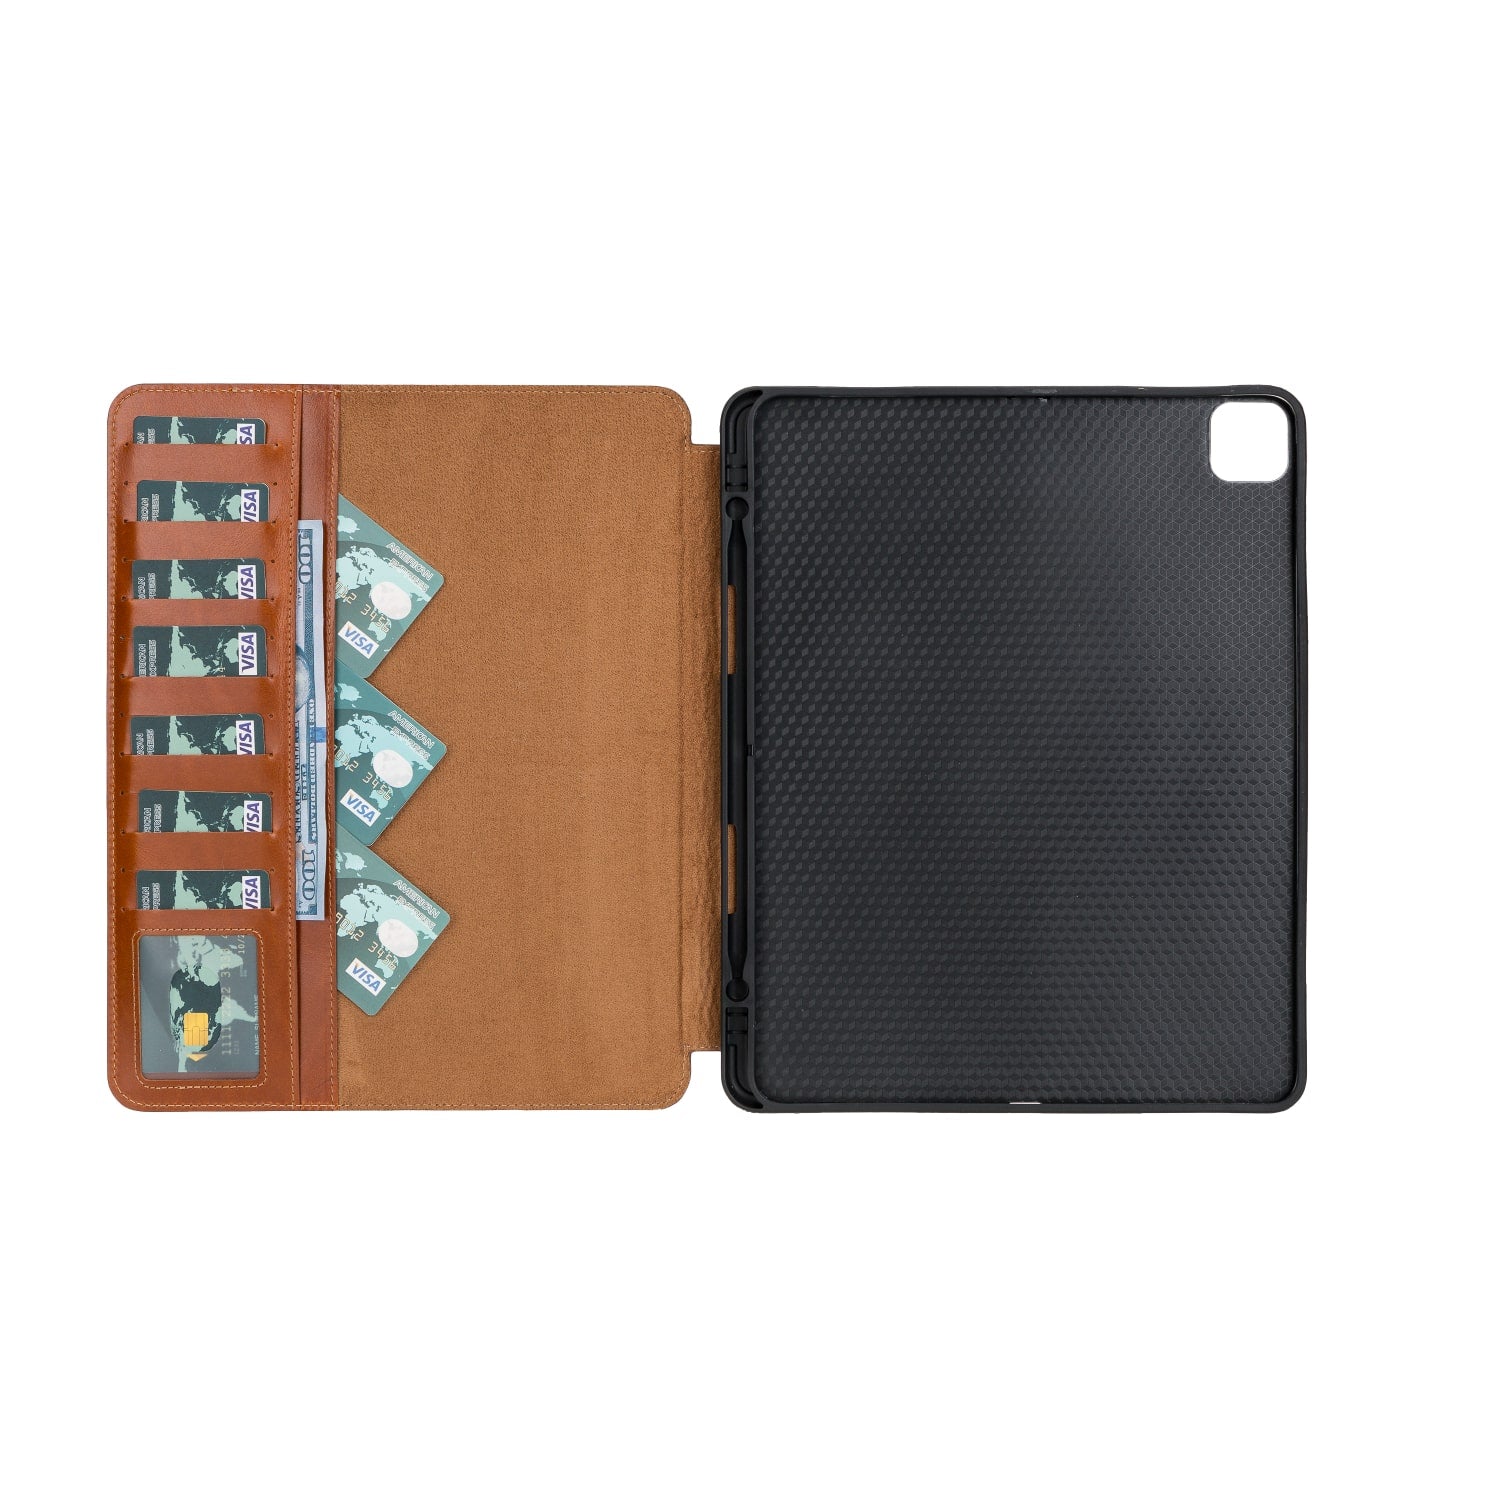 Brown Leather iPad Pro 12.9 Inc Smart Folio Case with Apple Pen Holder - Bomonti - 2